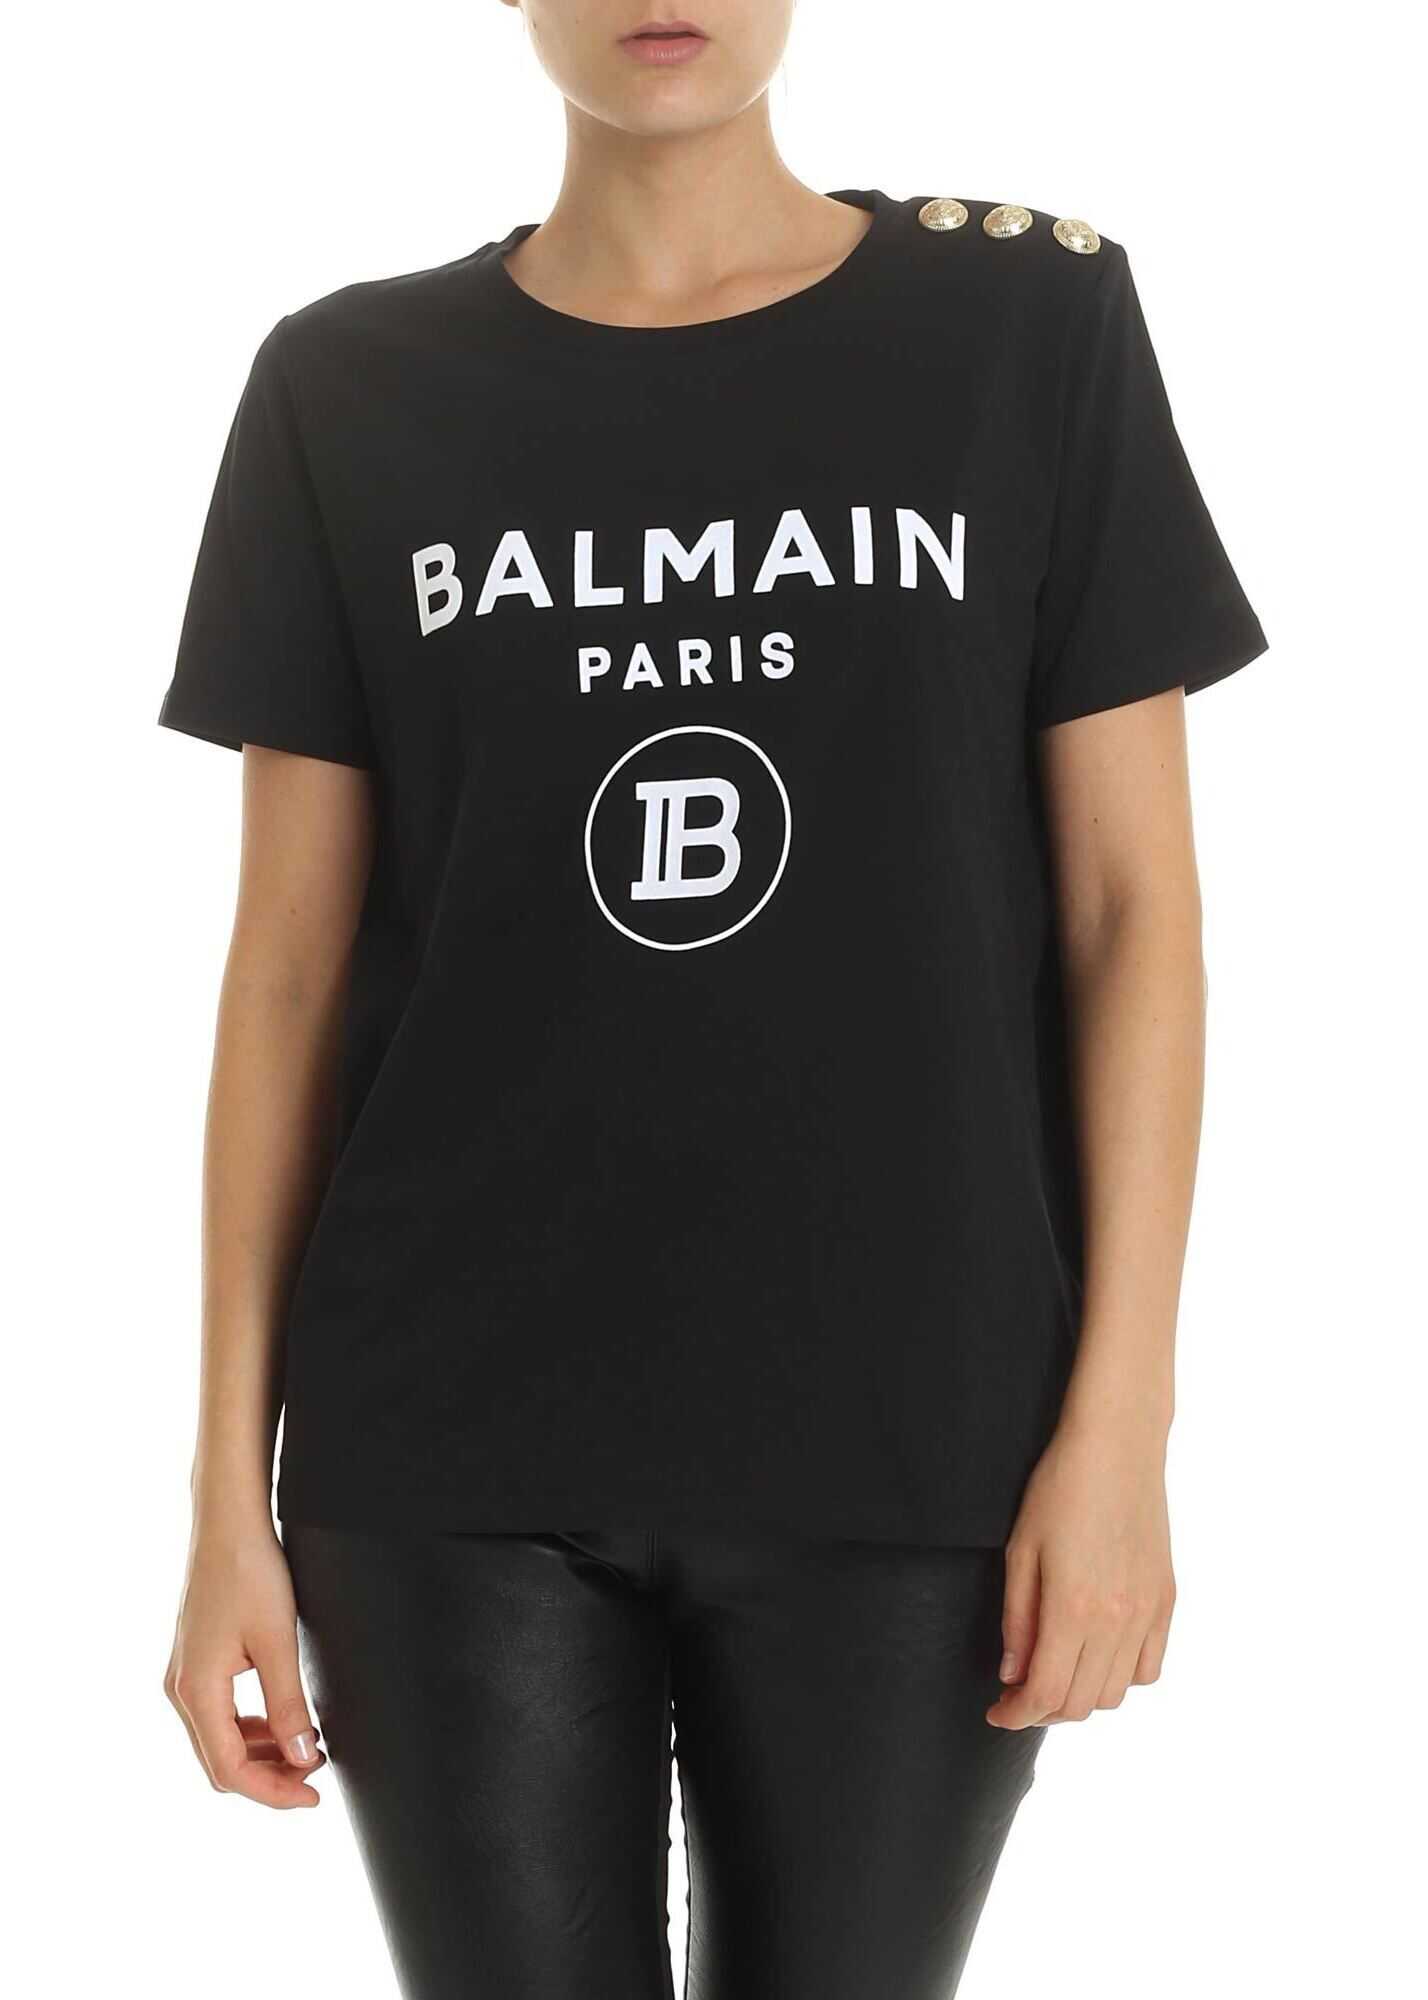 Balmain Black T-Shirt With White Flock Logo Black